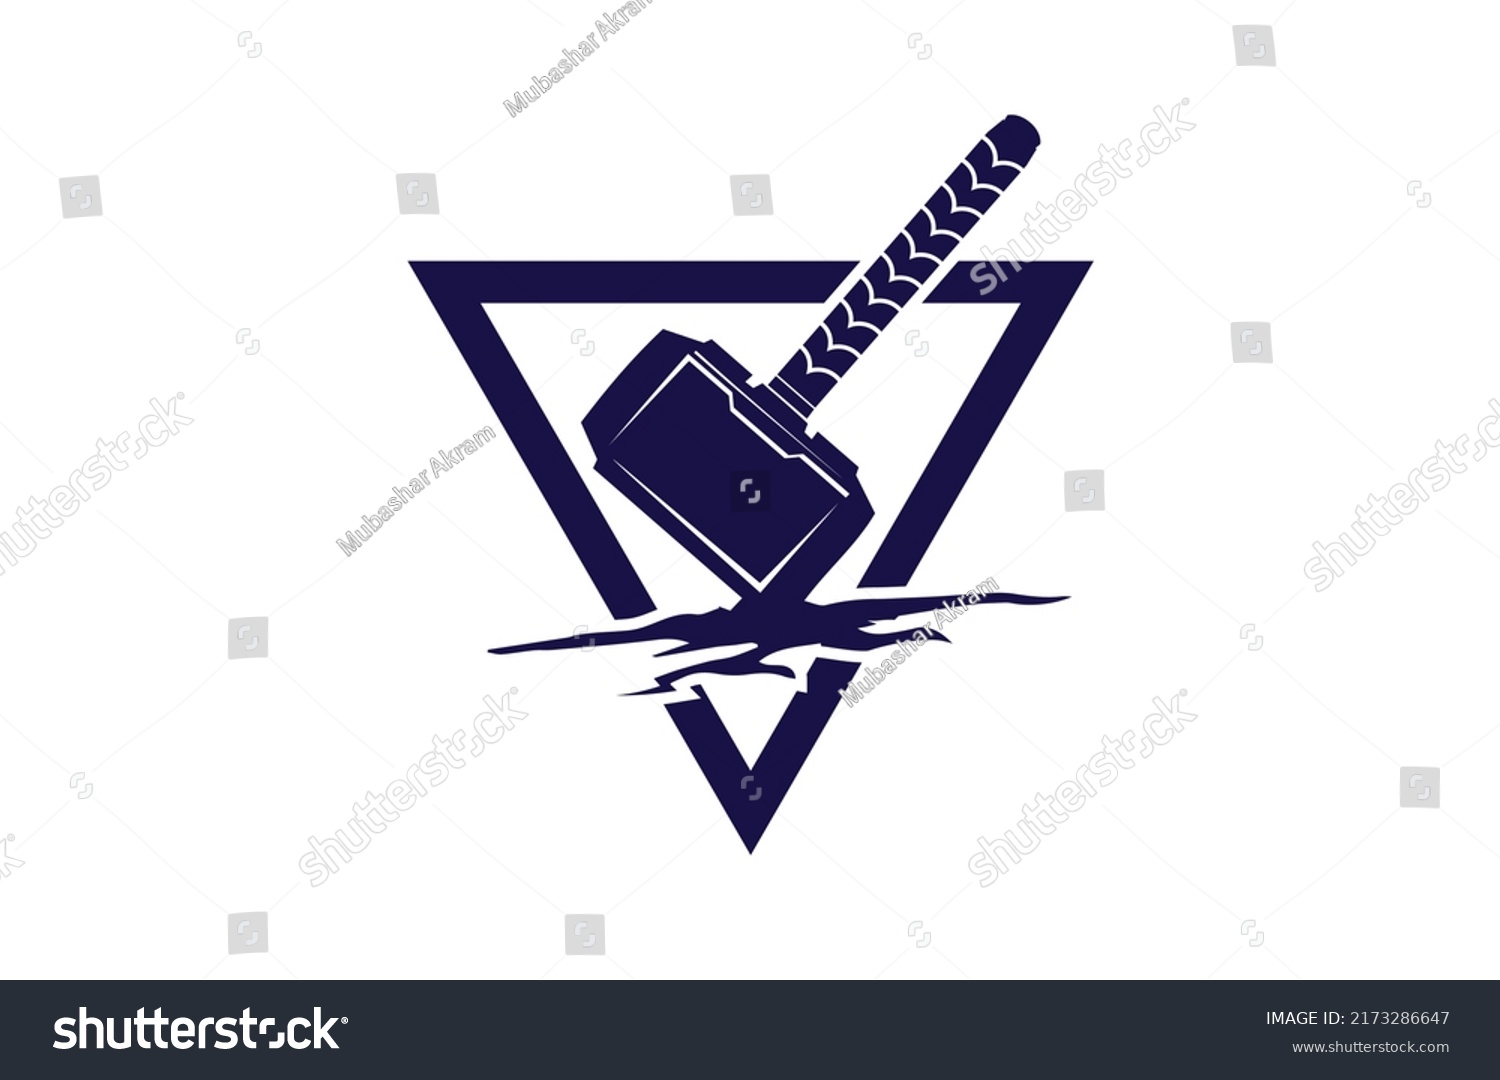 SVG of Hammer triangular logo design svg